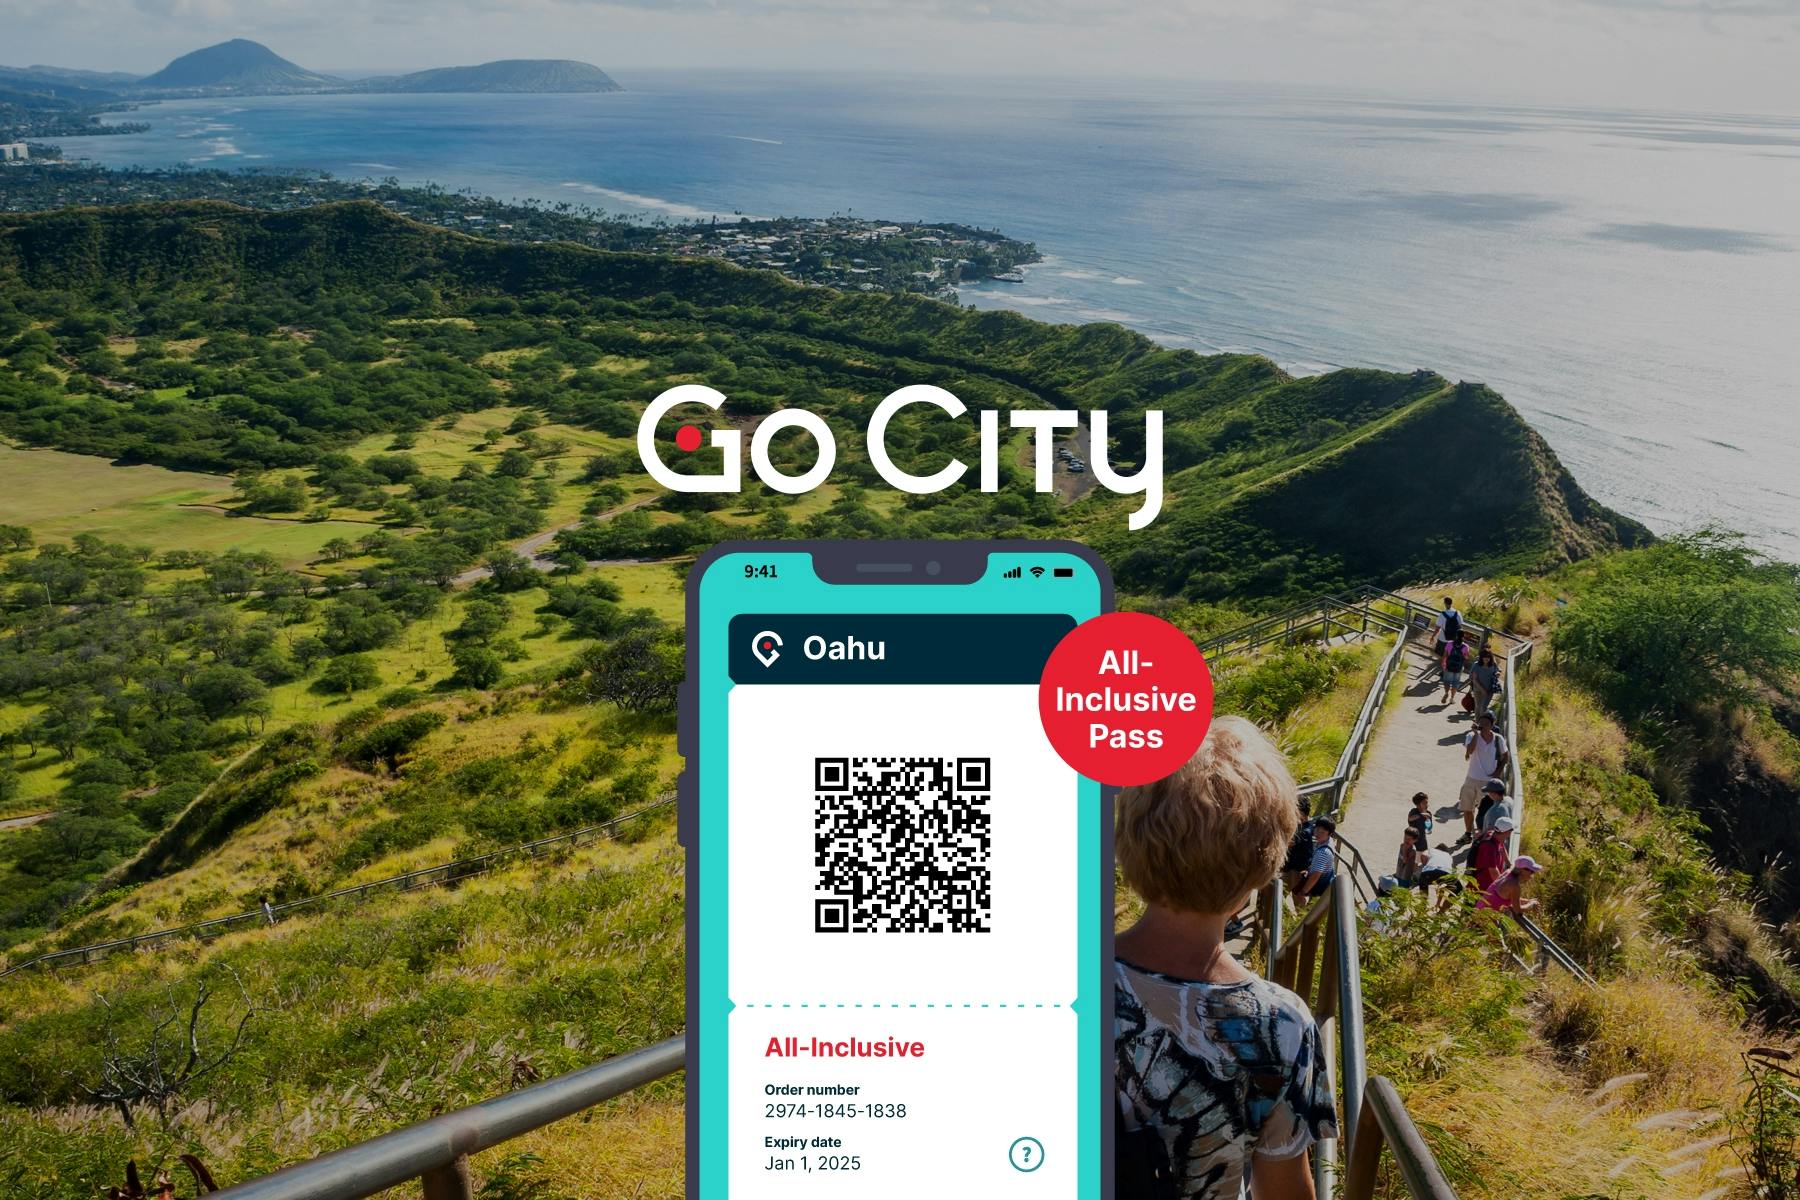 Go City | Oahu Card All-Inclusive Pass